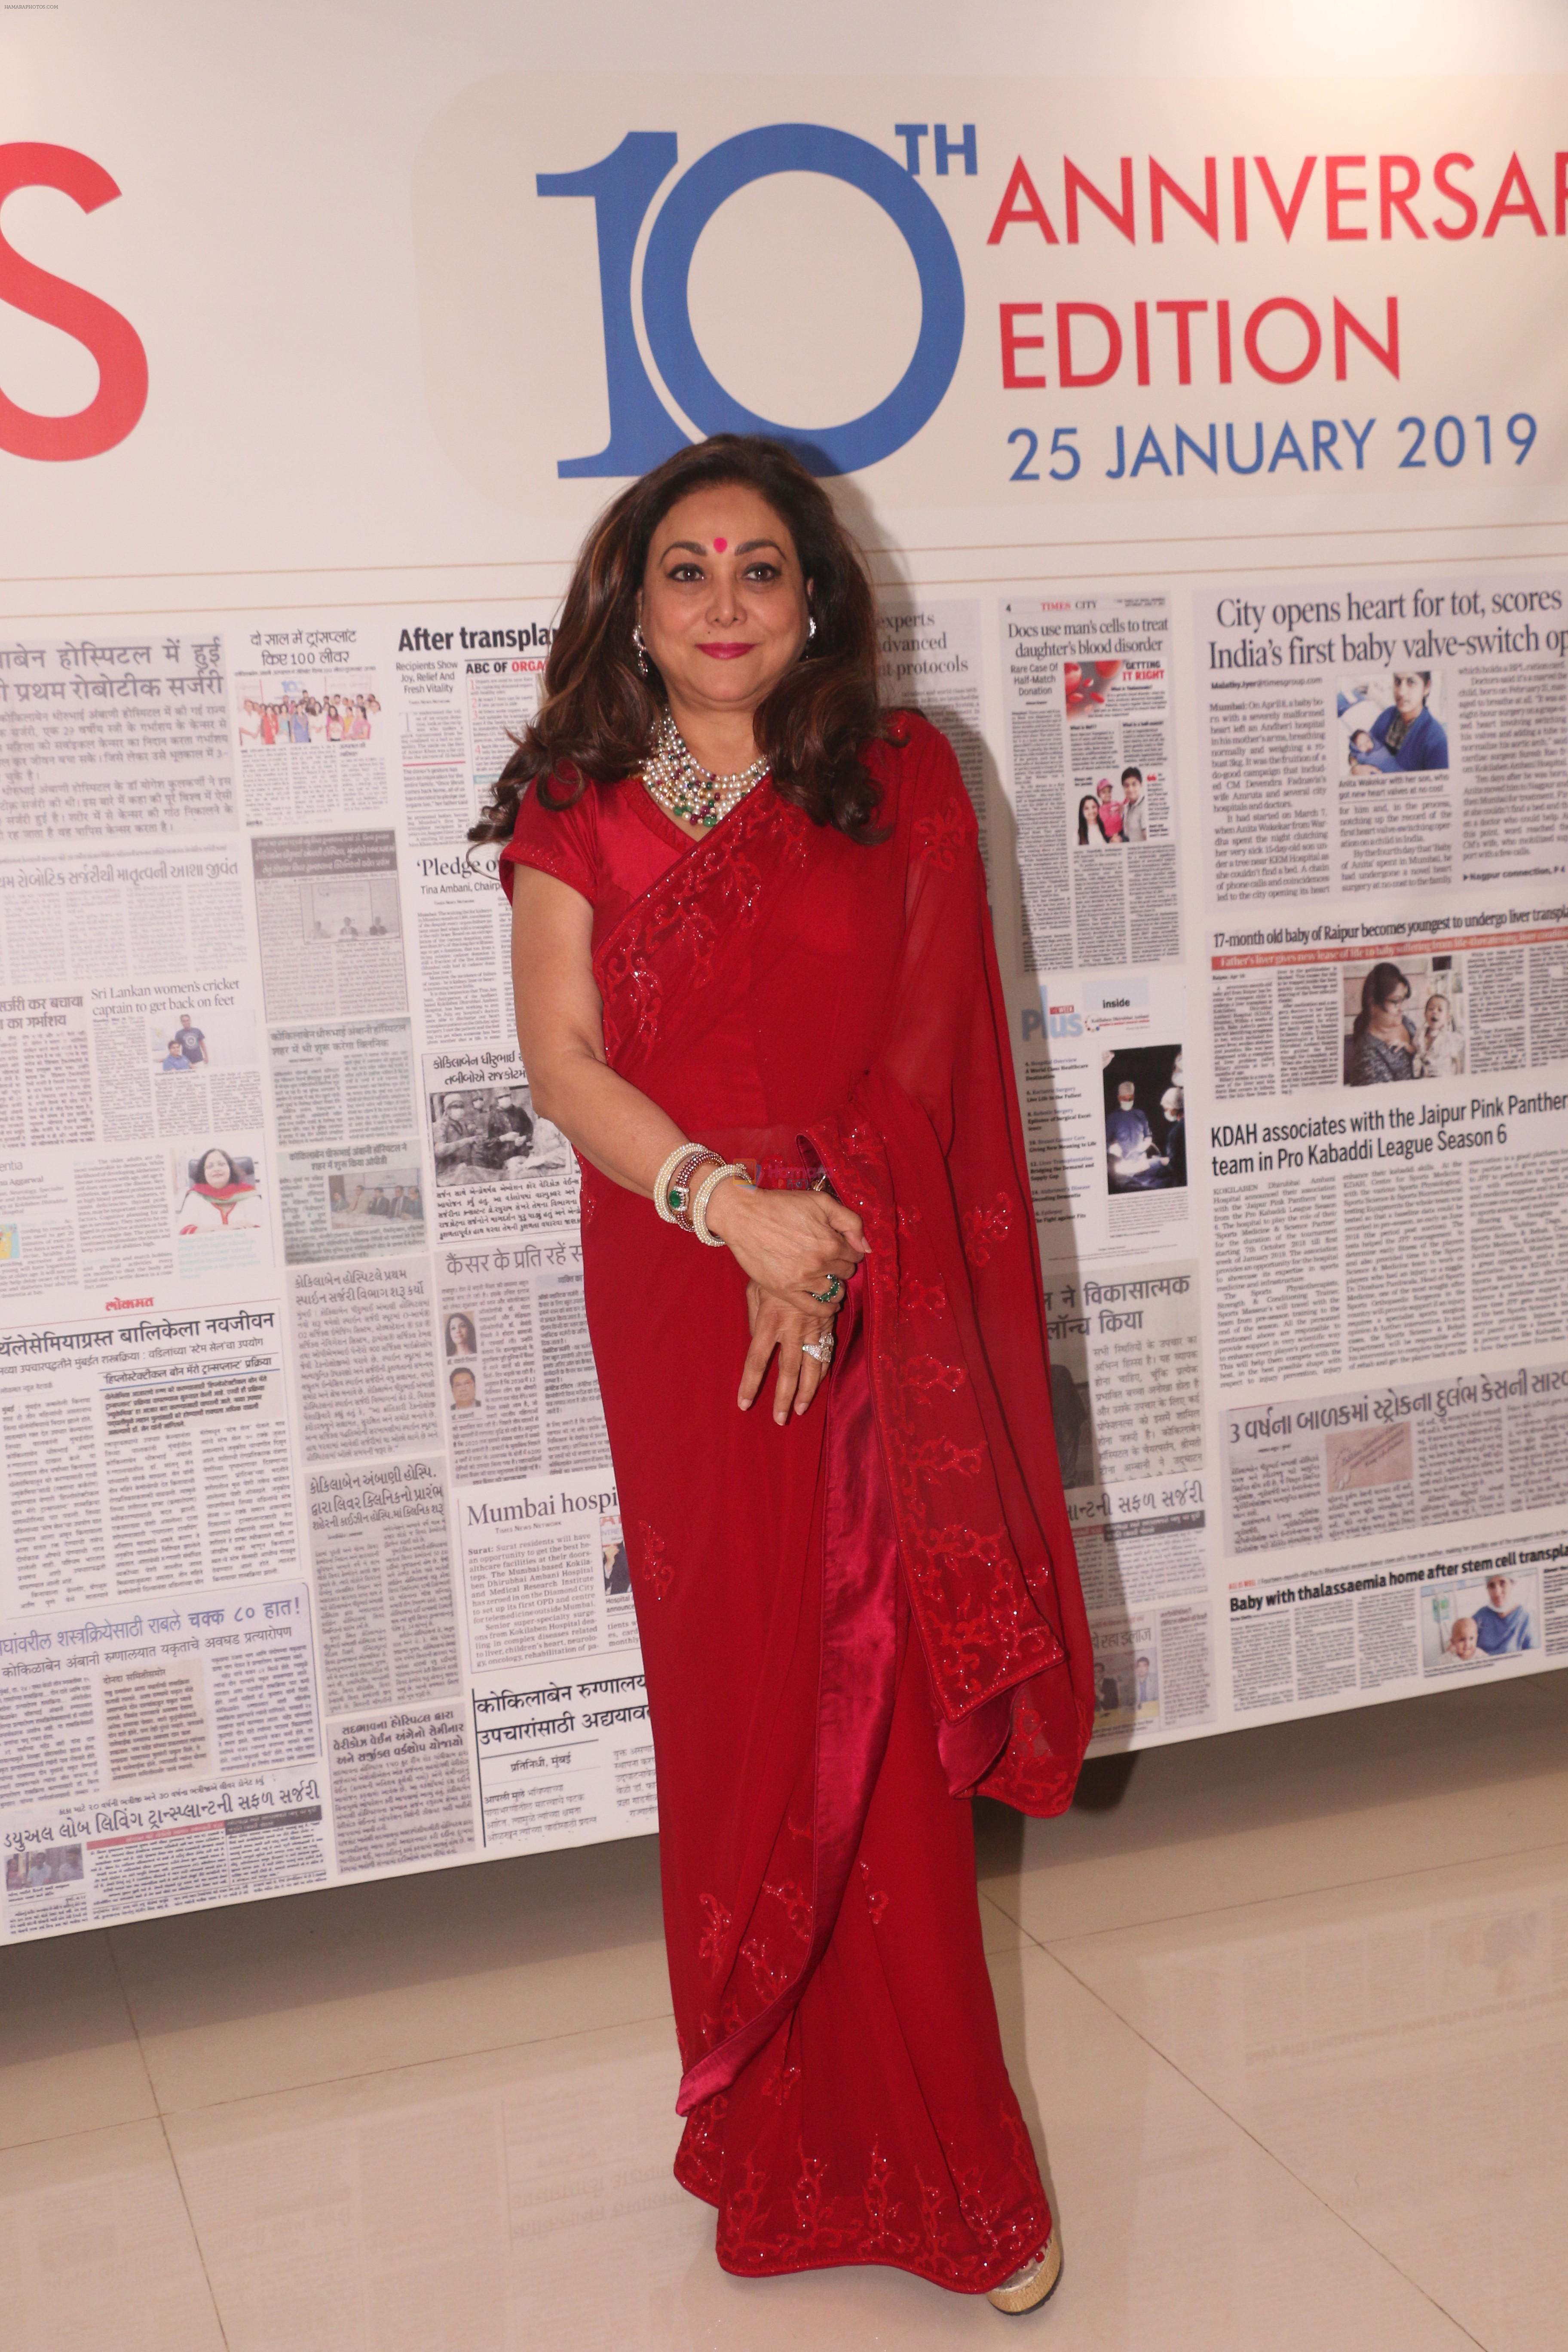 Tina Ambani at Decade of Distinction at Kokilaben Ambani hospital in Andheri, Mumbai on 26th Jan 2019